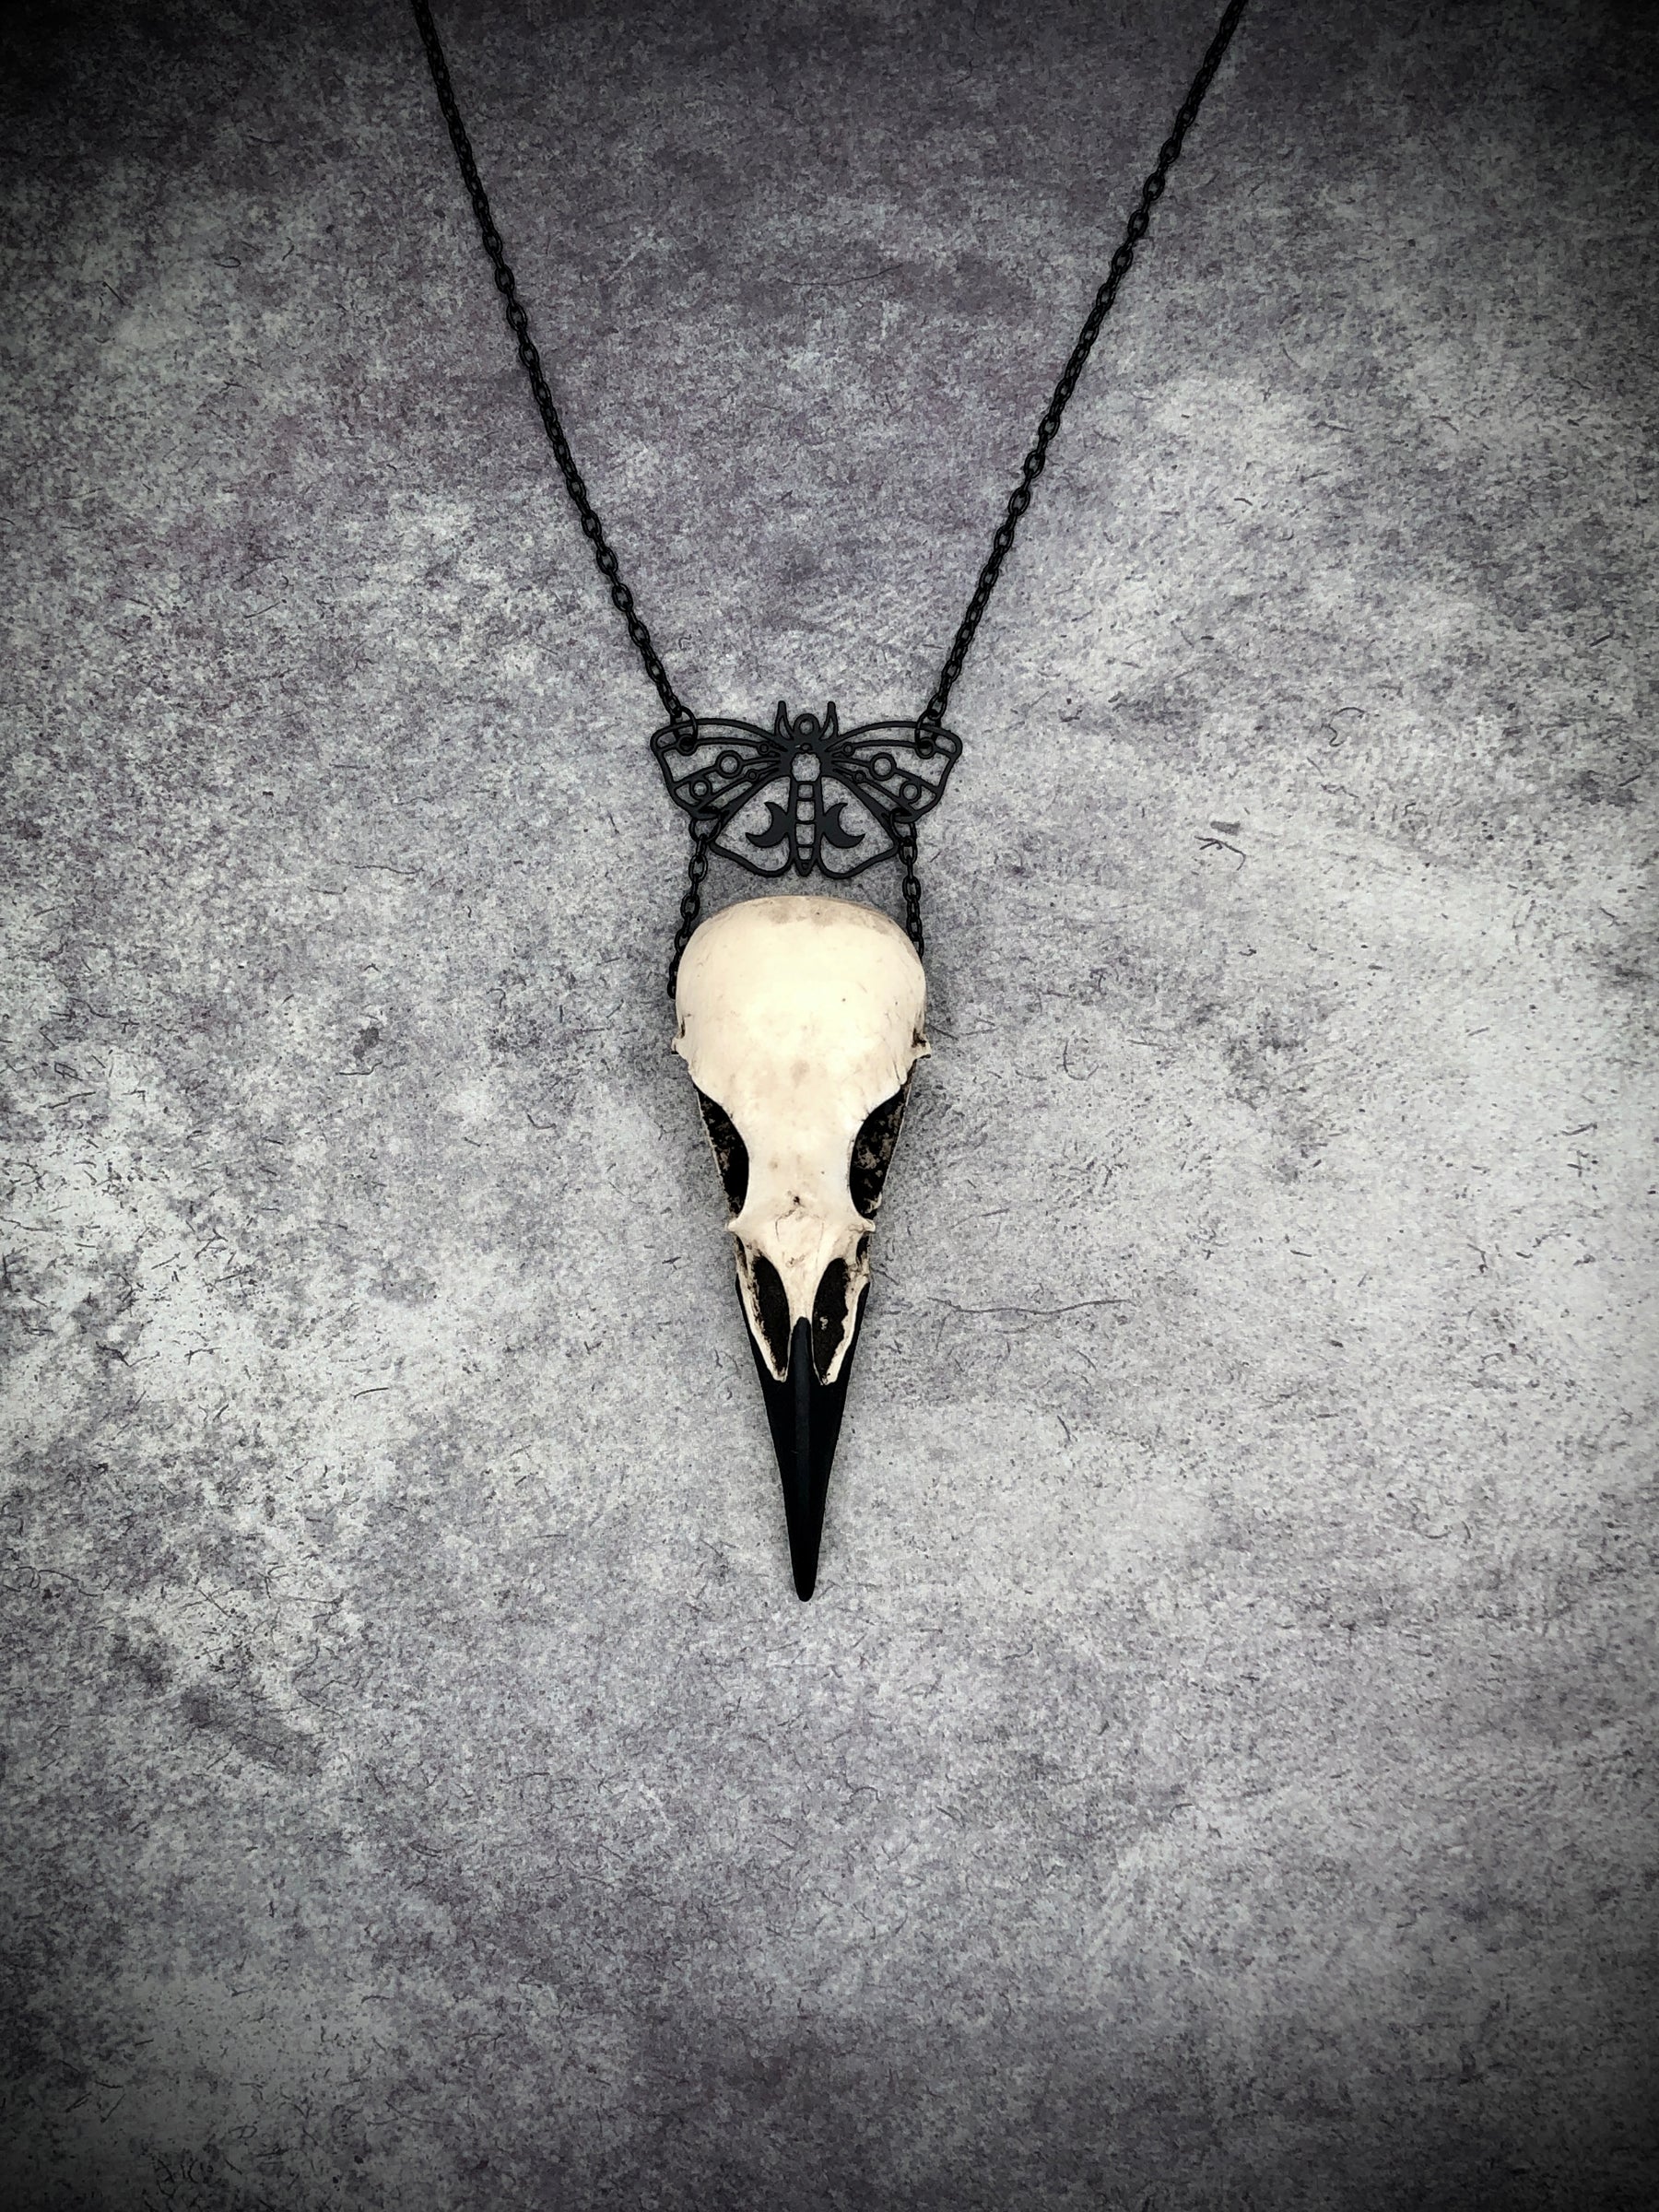 Woodland moth luna butterfly charm pendant and bone jewelry mini raven skull dangle pendant by artist making resin bird skulls.